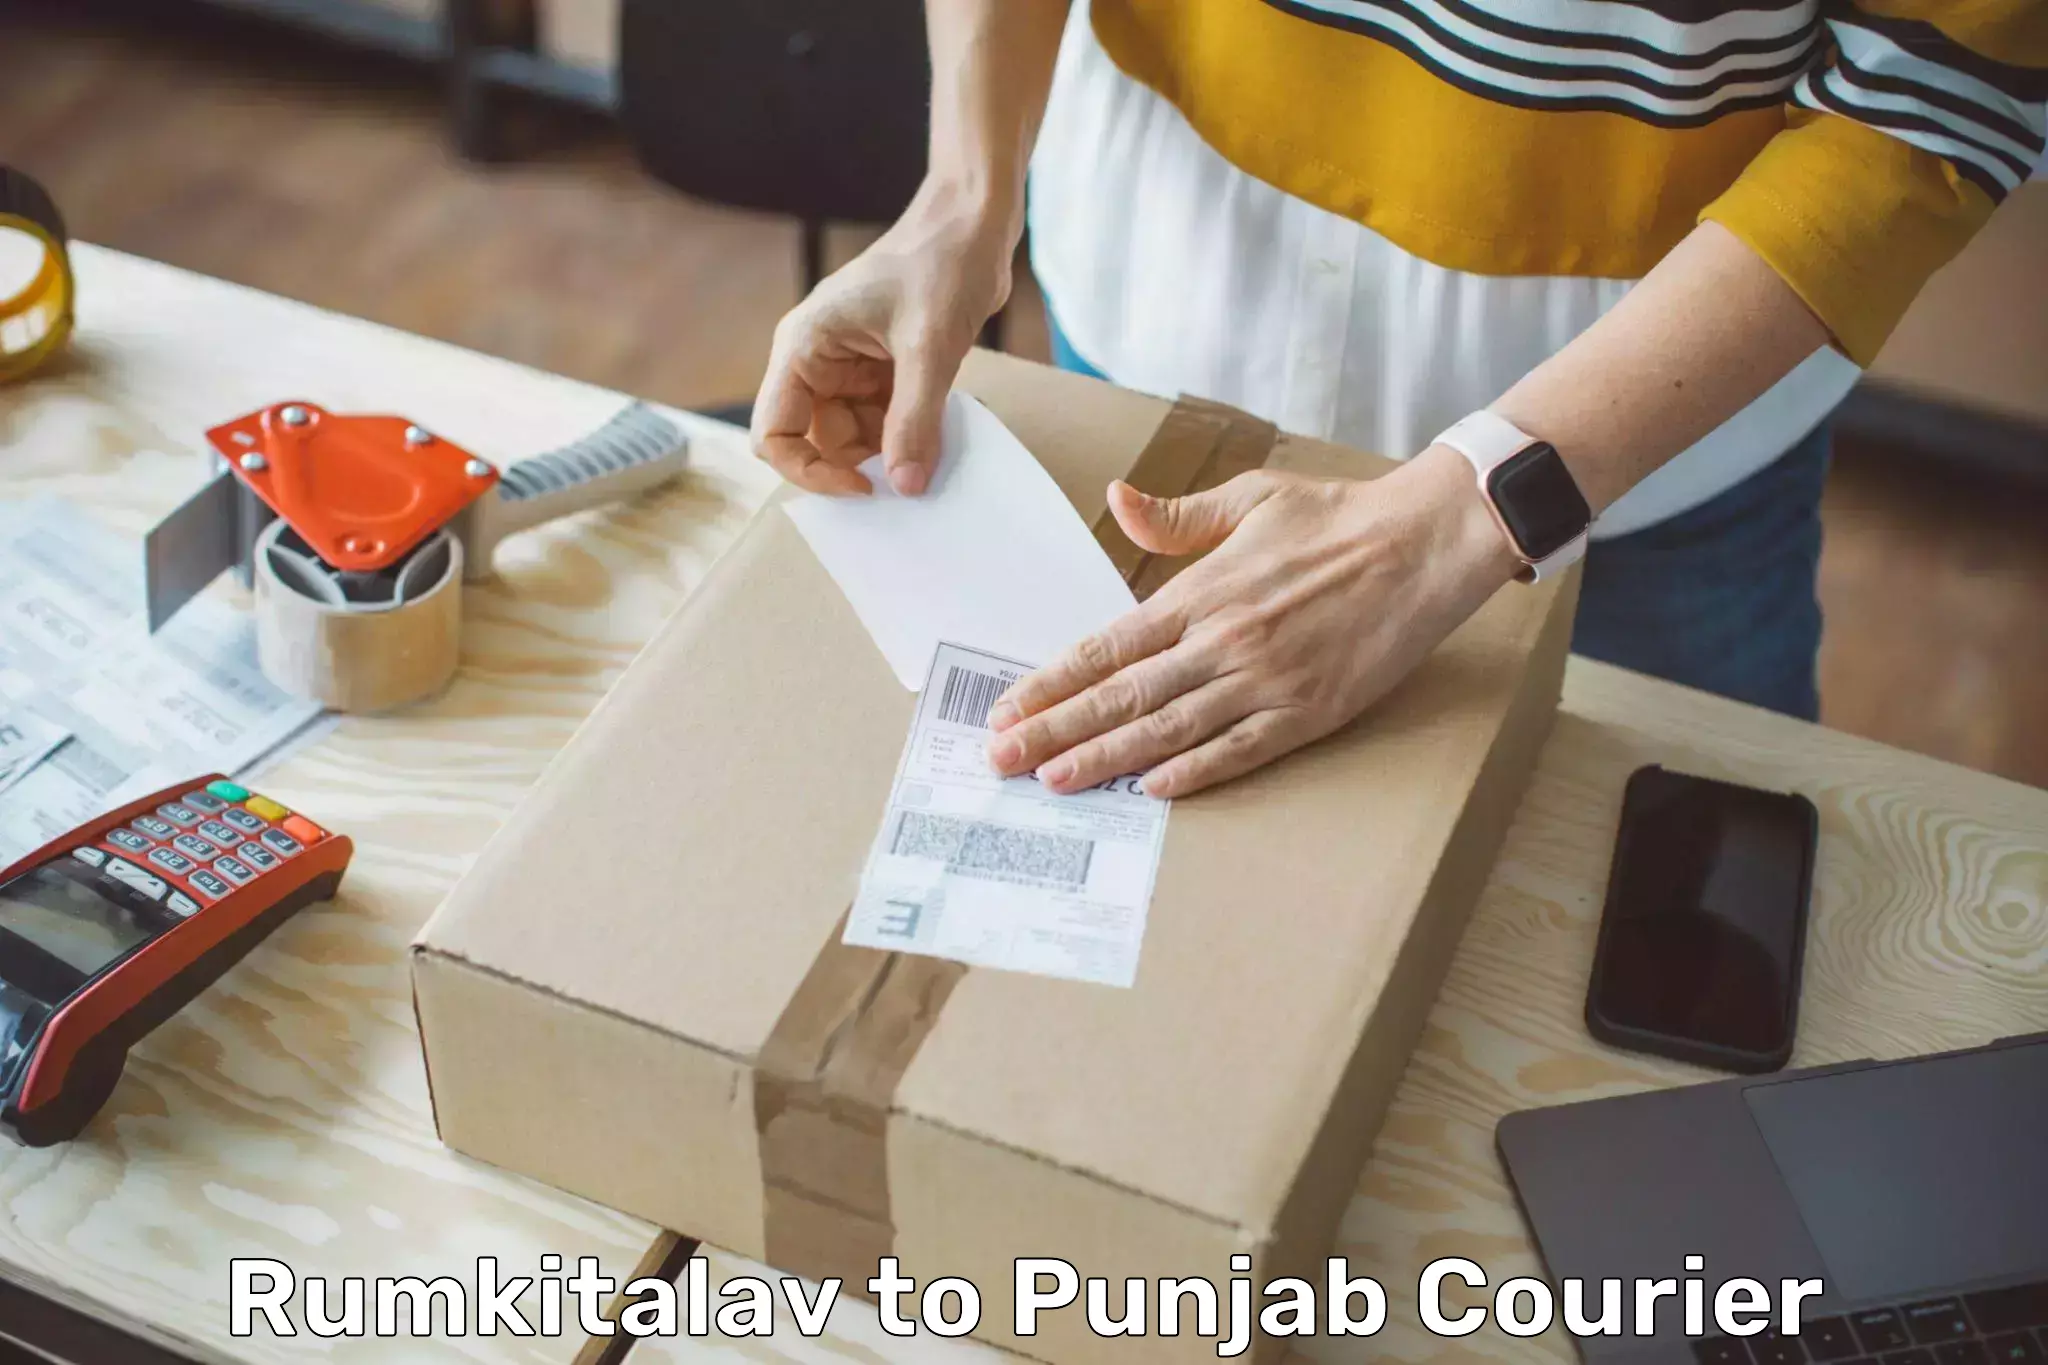 Express mail solutions Rumkitalav to Punjab